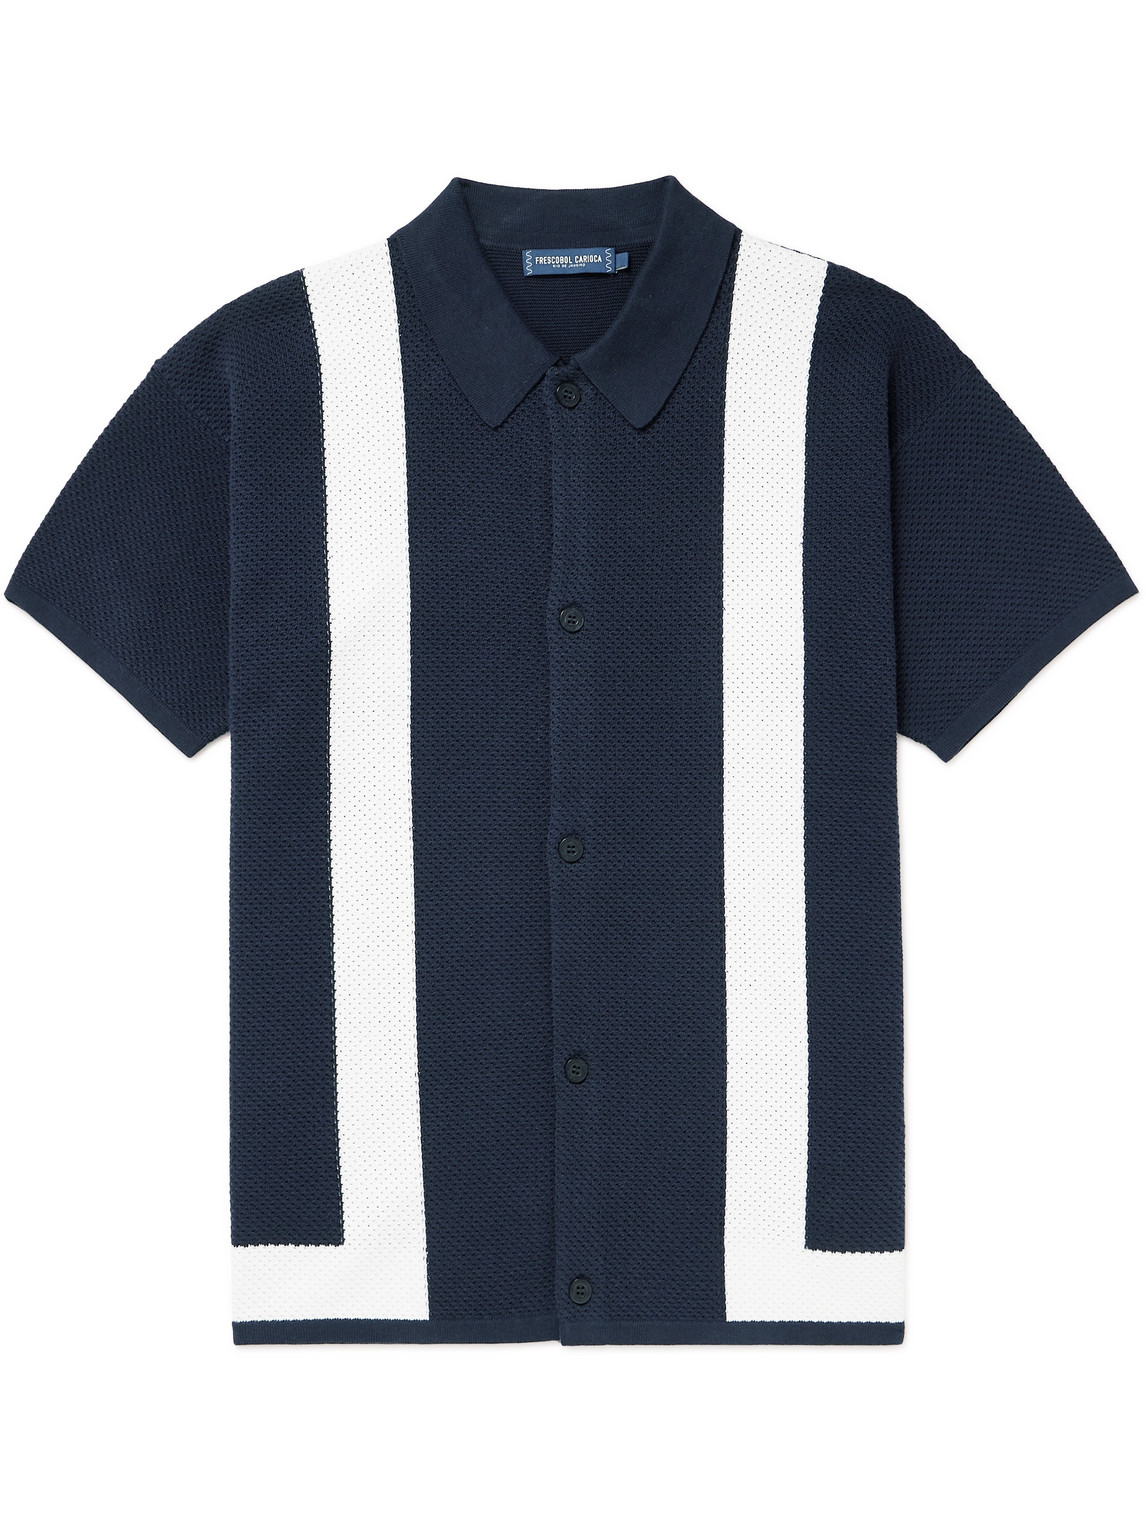 Frescobol Carioca - Barretos Striped Knitted Cotton Shirt - Men - Blue - M von Frescobol Carioca